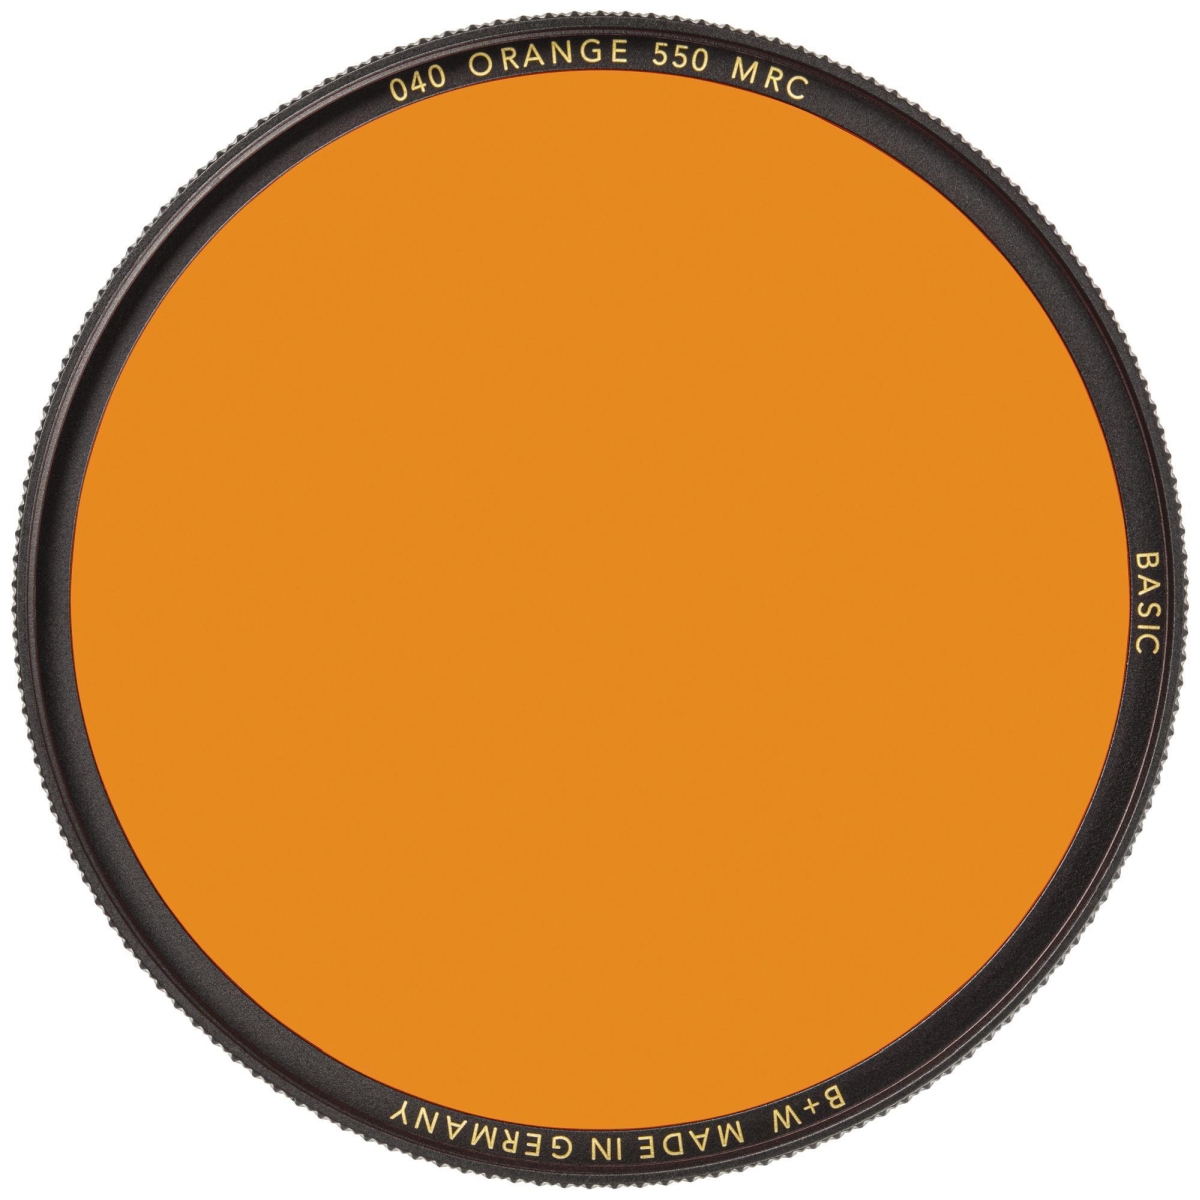 B+W Orange Filter 52 mm 550 MRC Basic